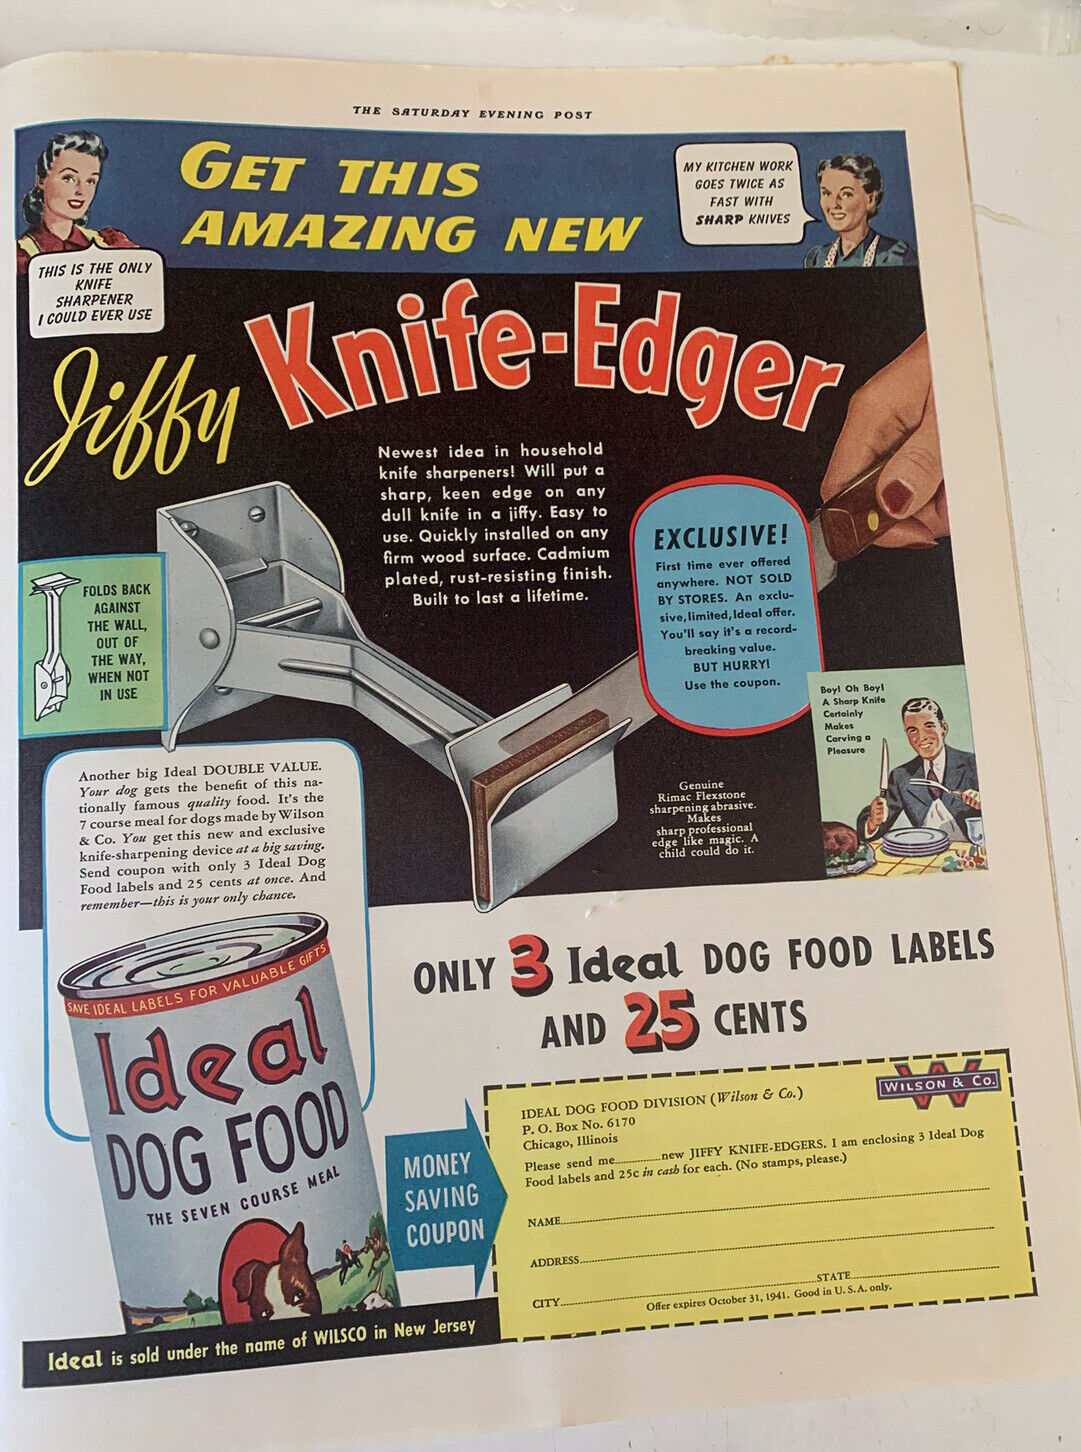 1964 Ideal Dog Food Ad - Unusual offer